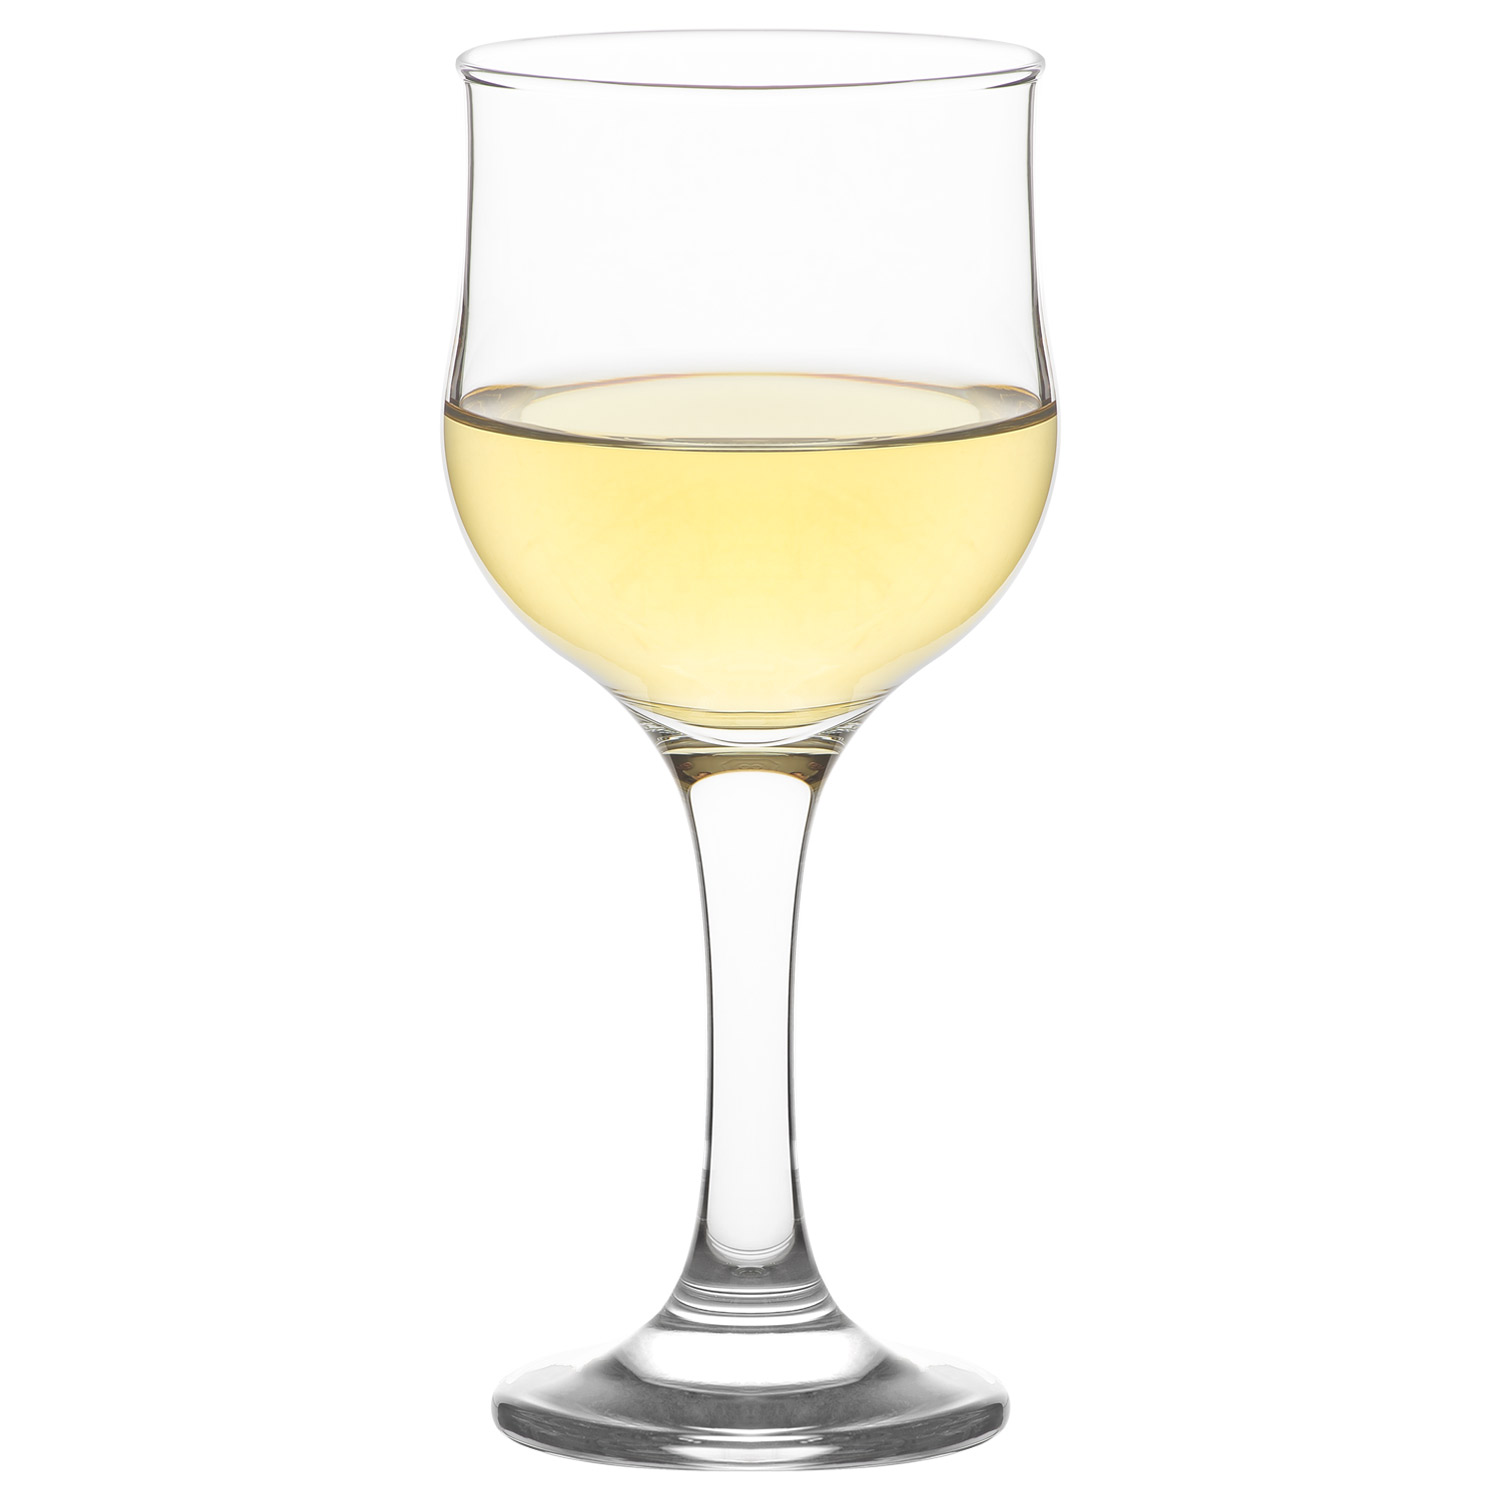 LAV Small Wine Glasses Set of 6 - 8 oz Clear White Wine Glasses